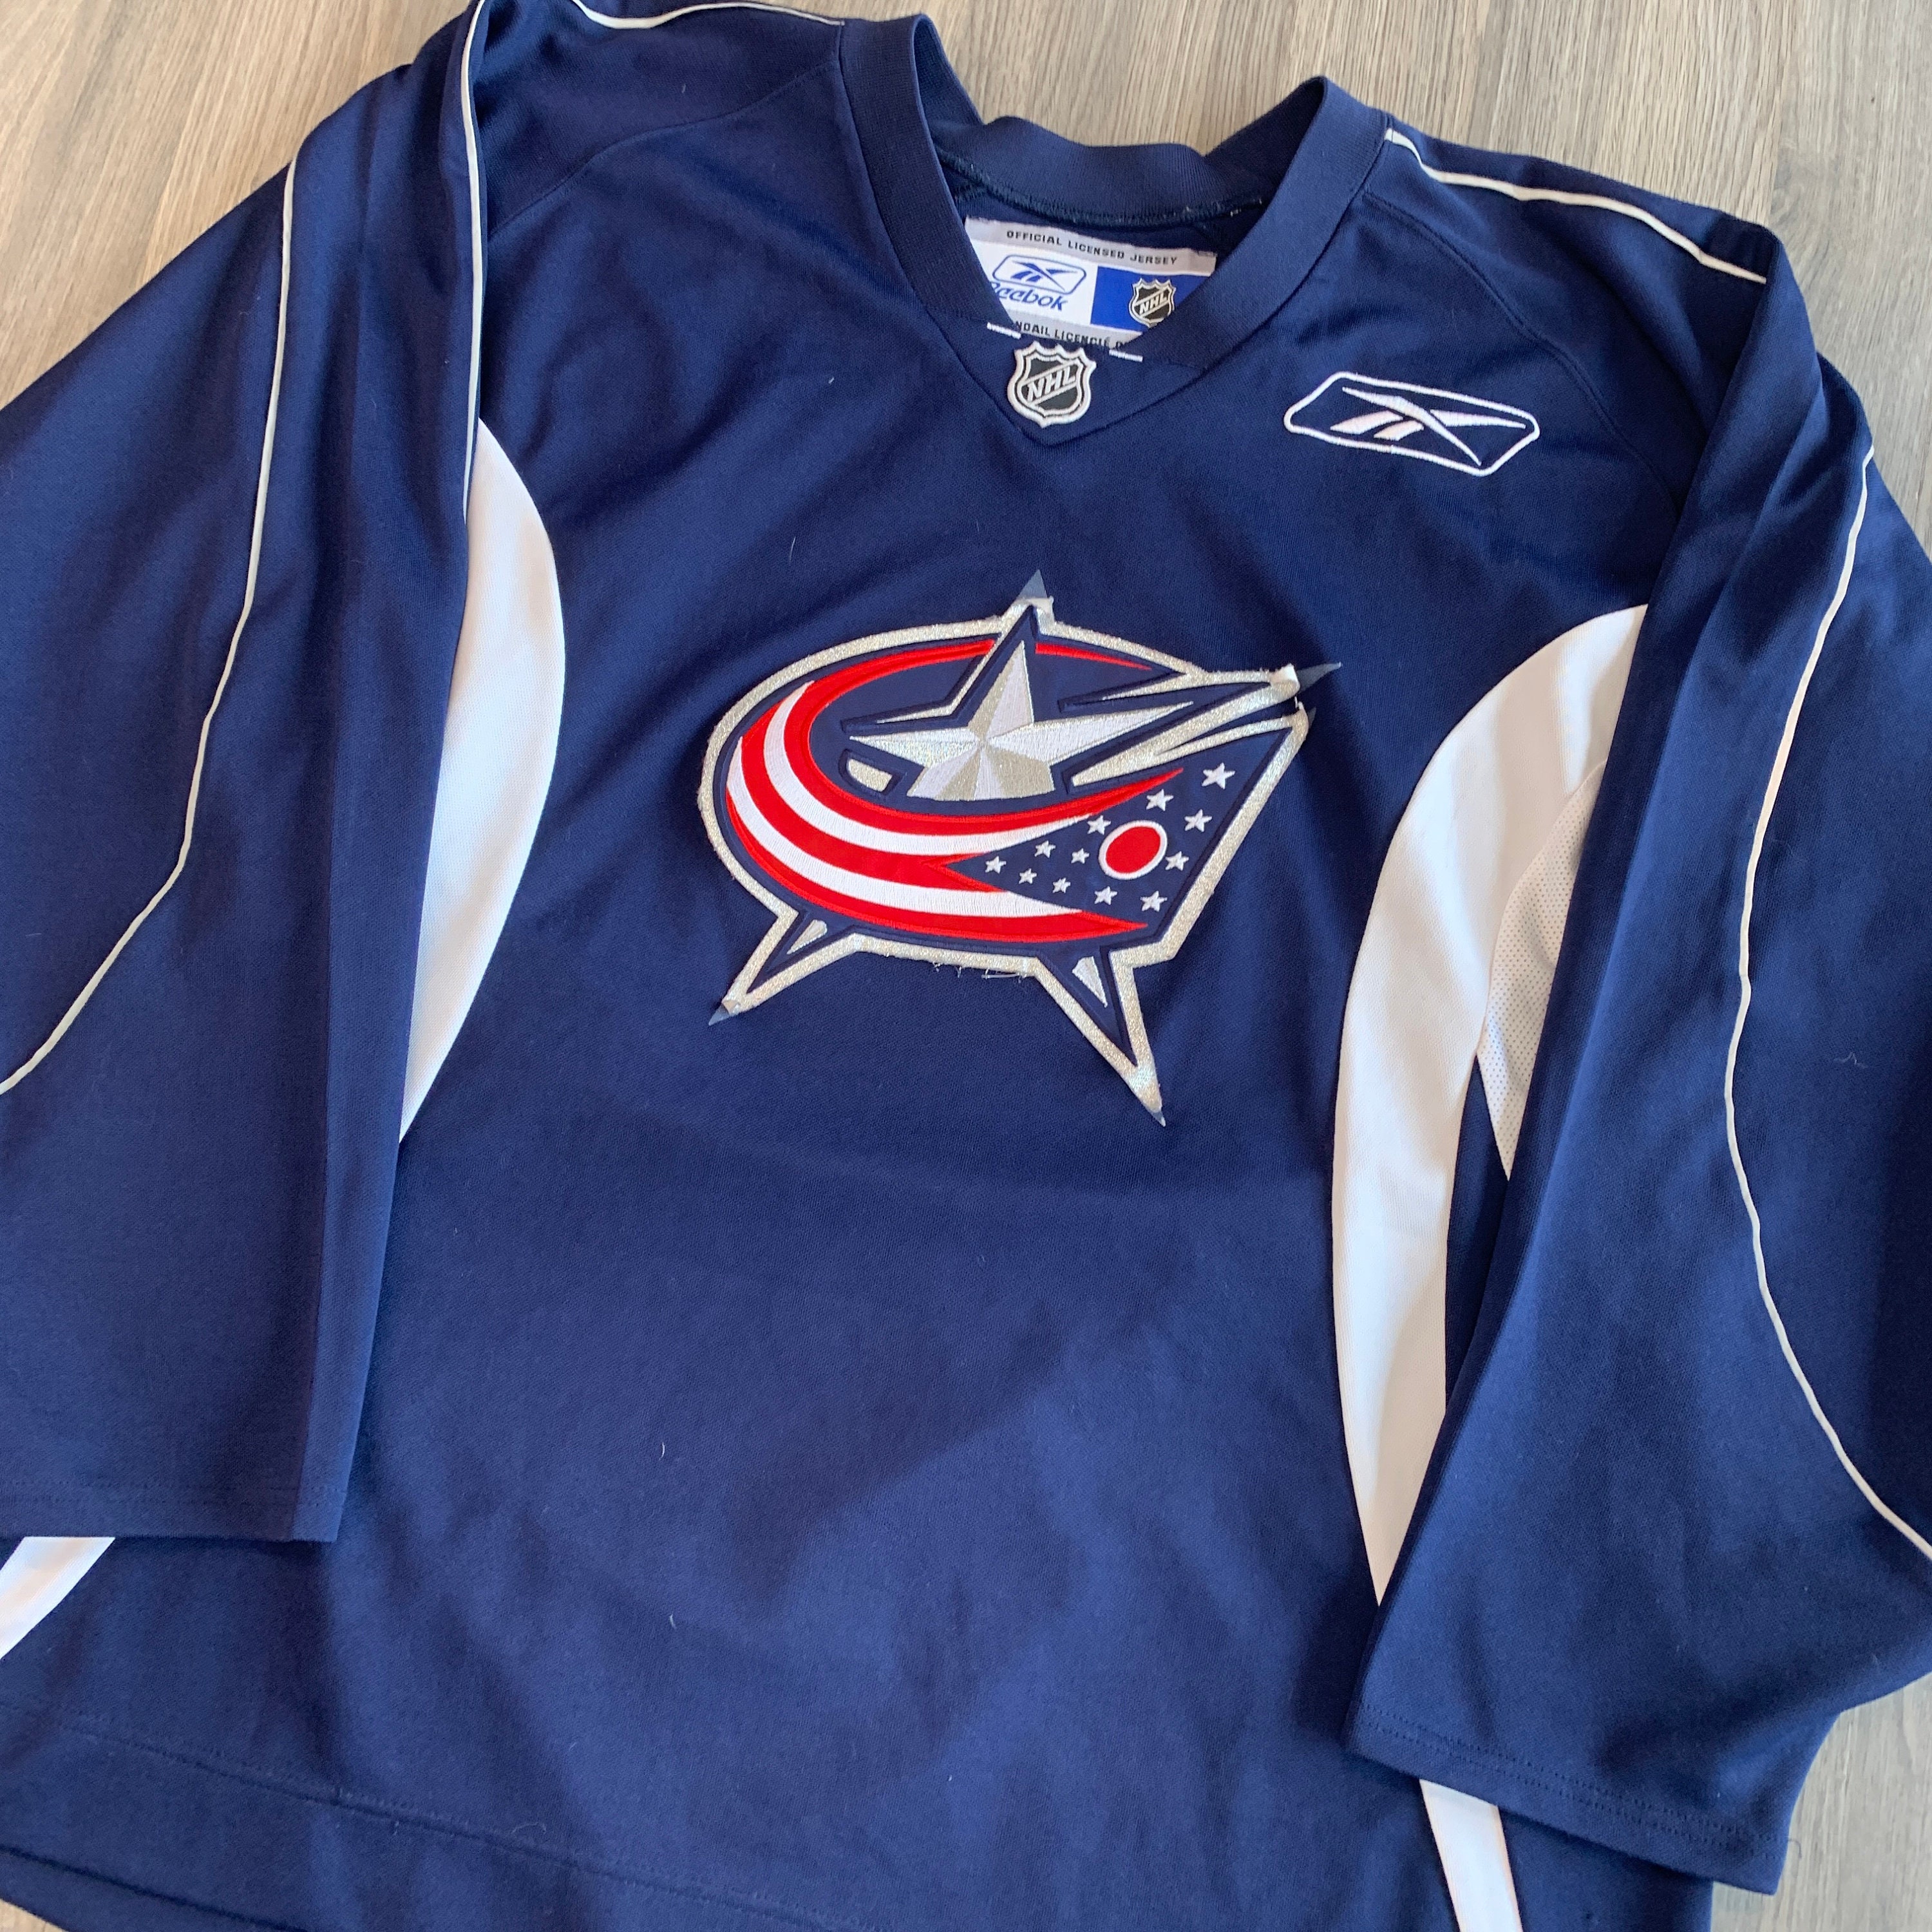 NHL Columbus Blue Jackets Mickey Mouse Disney Hockey T Shirt Long Sleeve T- Shirt